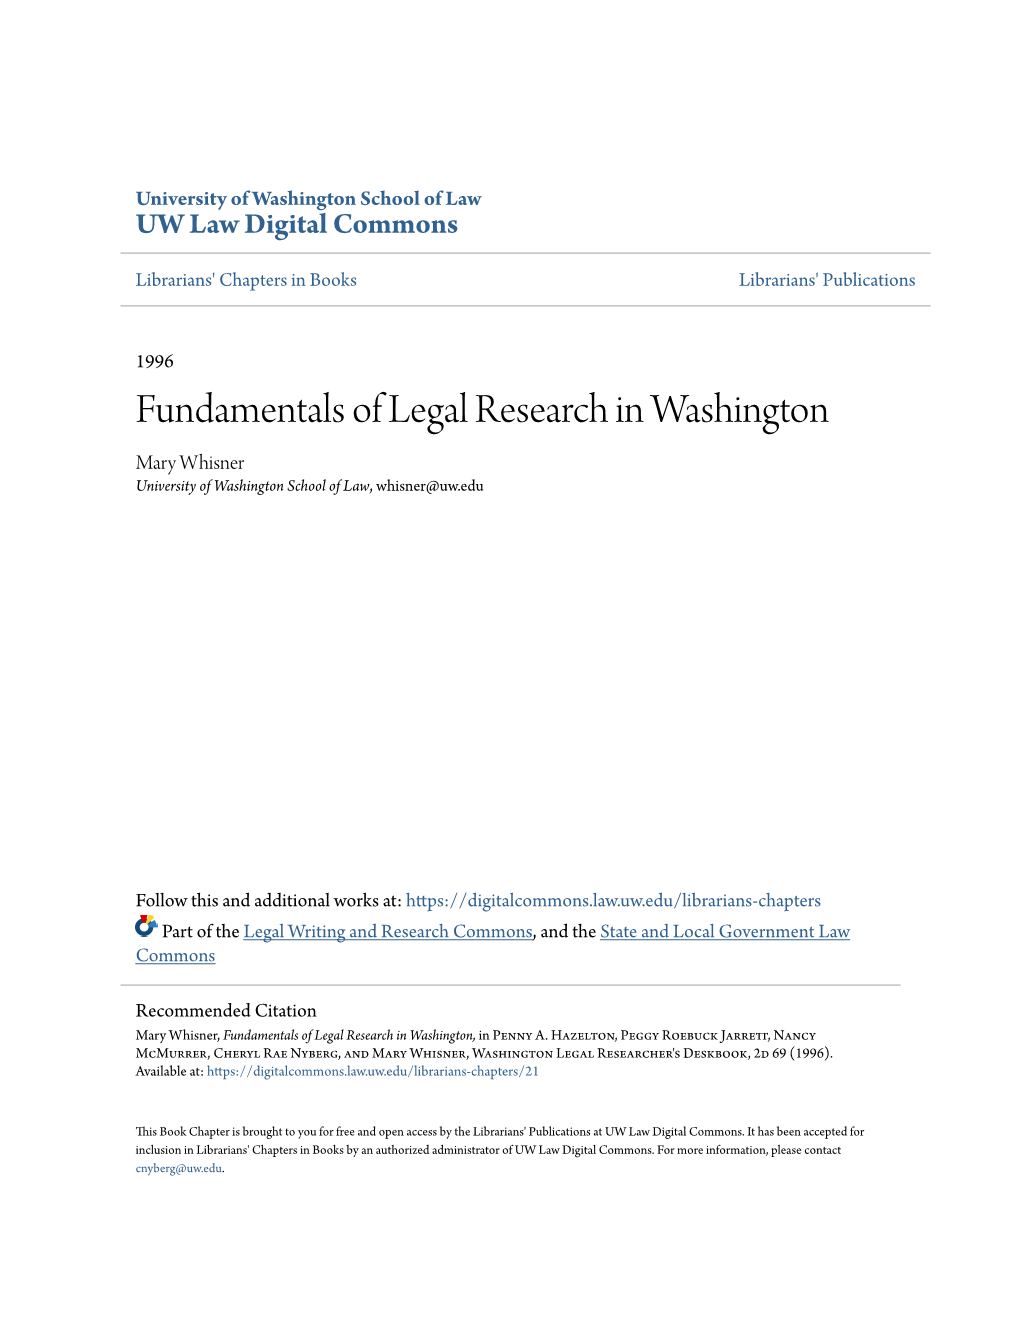 Fundamentals of Legal Research in Washington Mary Whisner University of Washington School of Law, Whisner@Uw.Edu